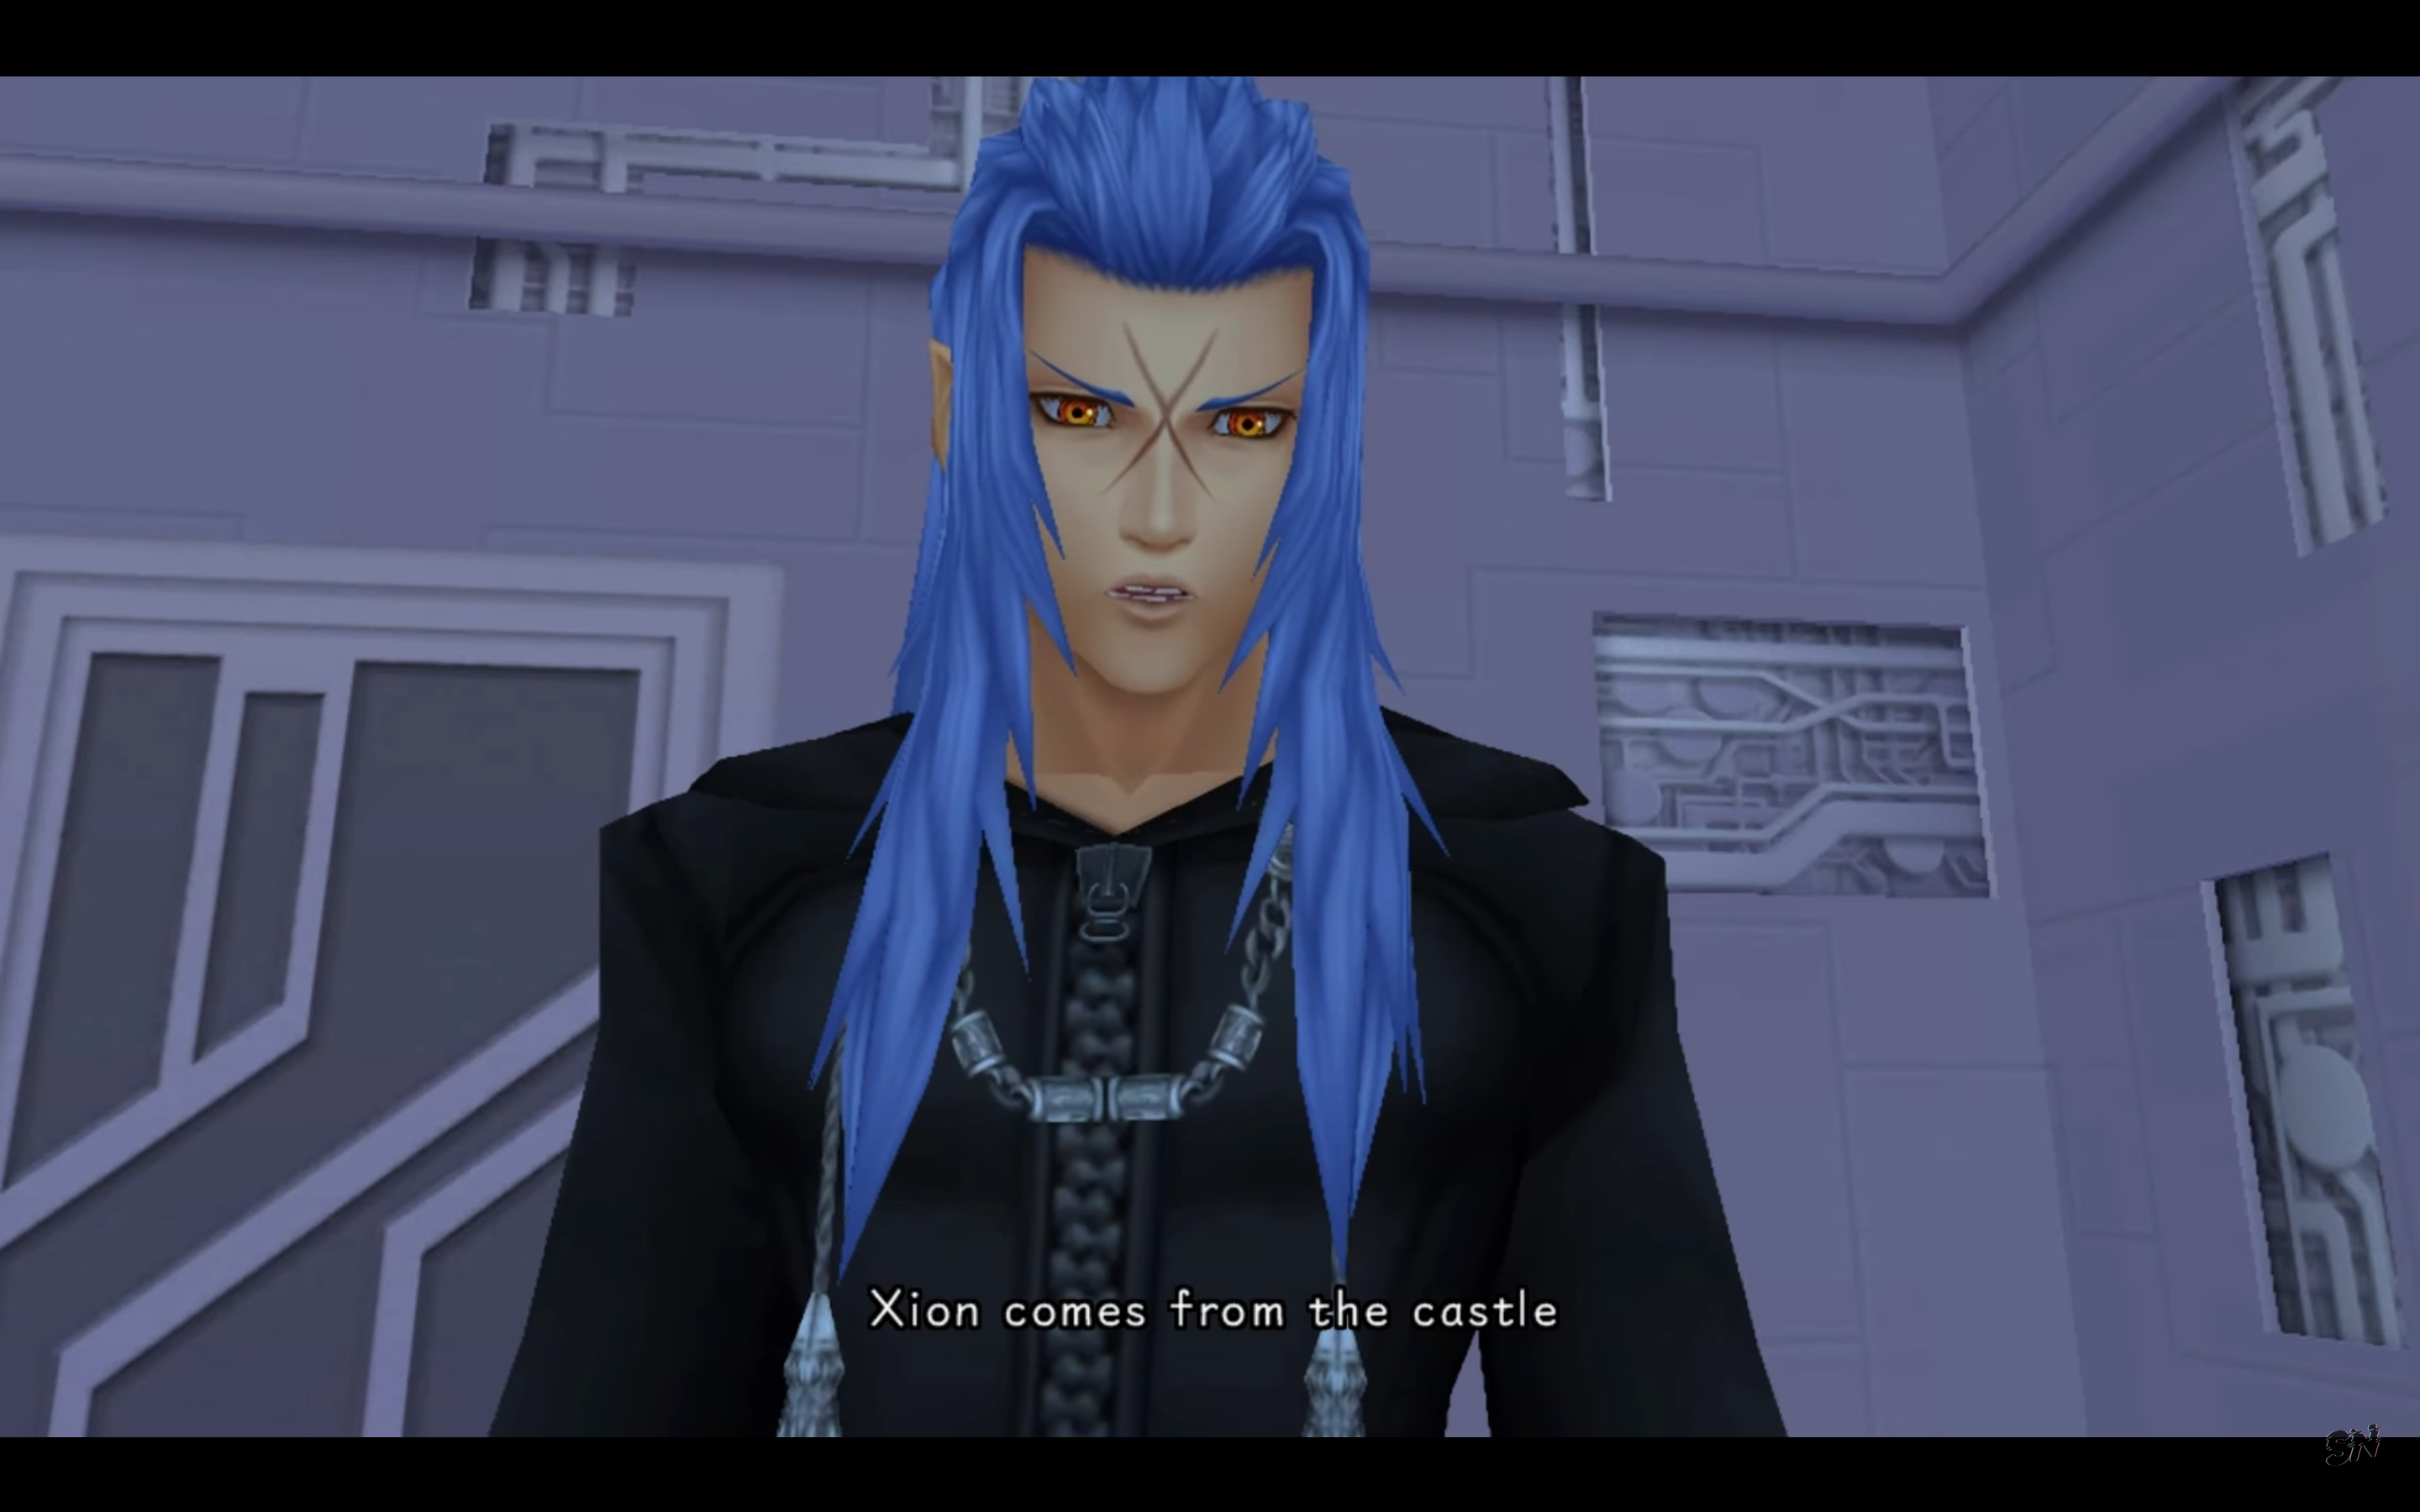 "Kingdom Hearts: 358/2 Days". 2009. Square Enix.
Saïx reveals Xion's origins.